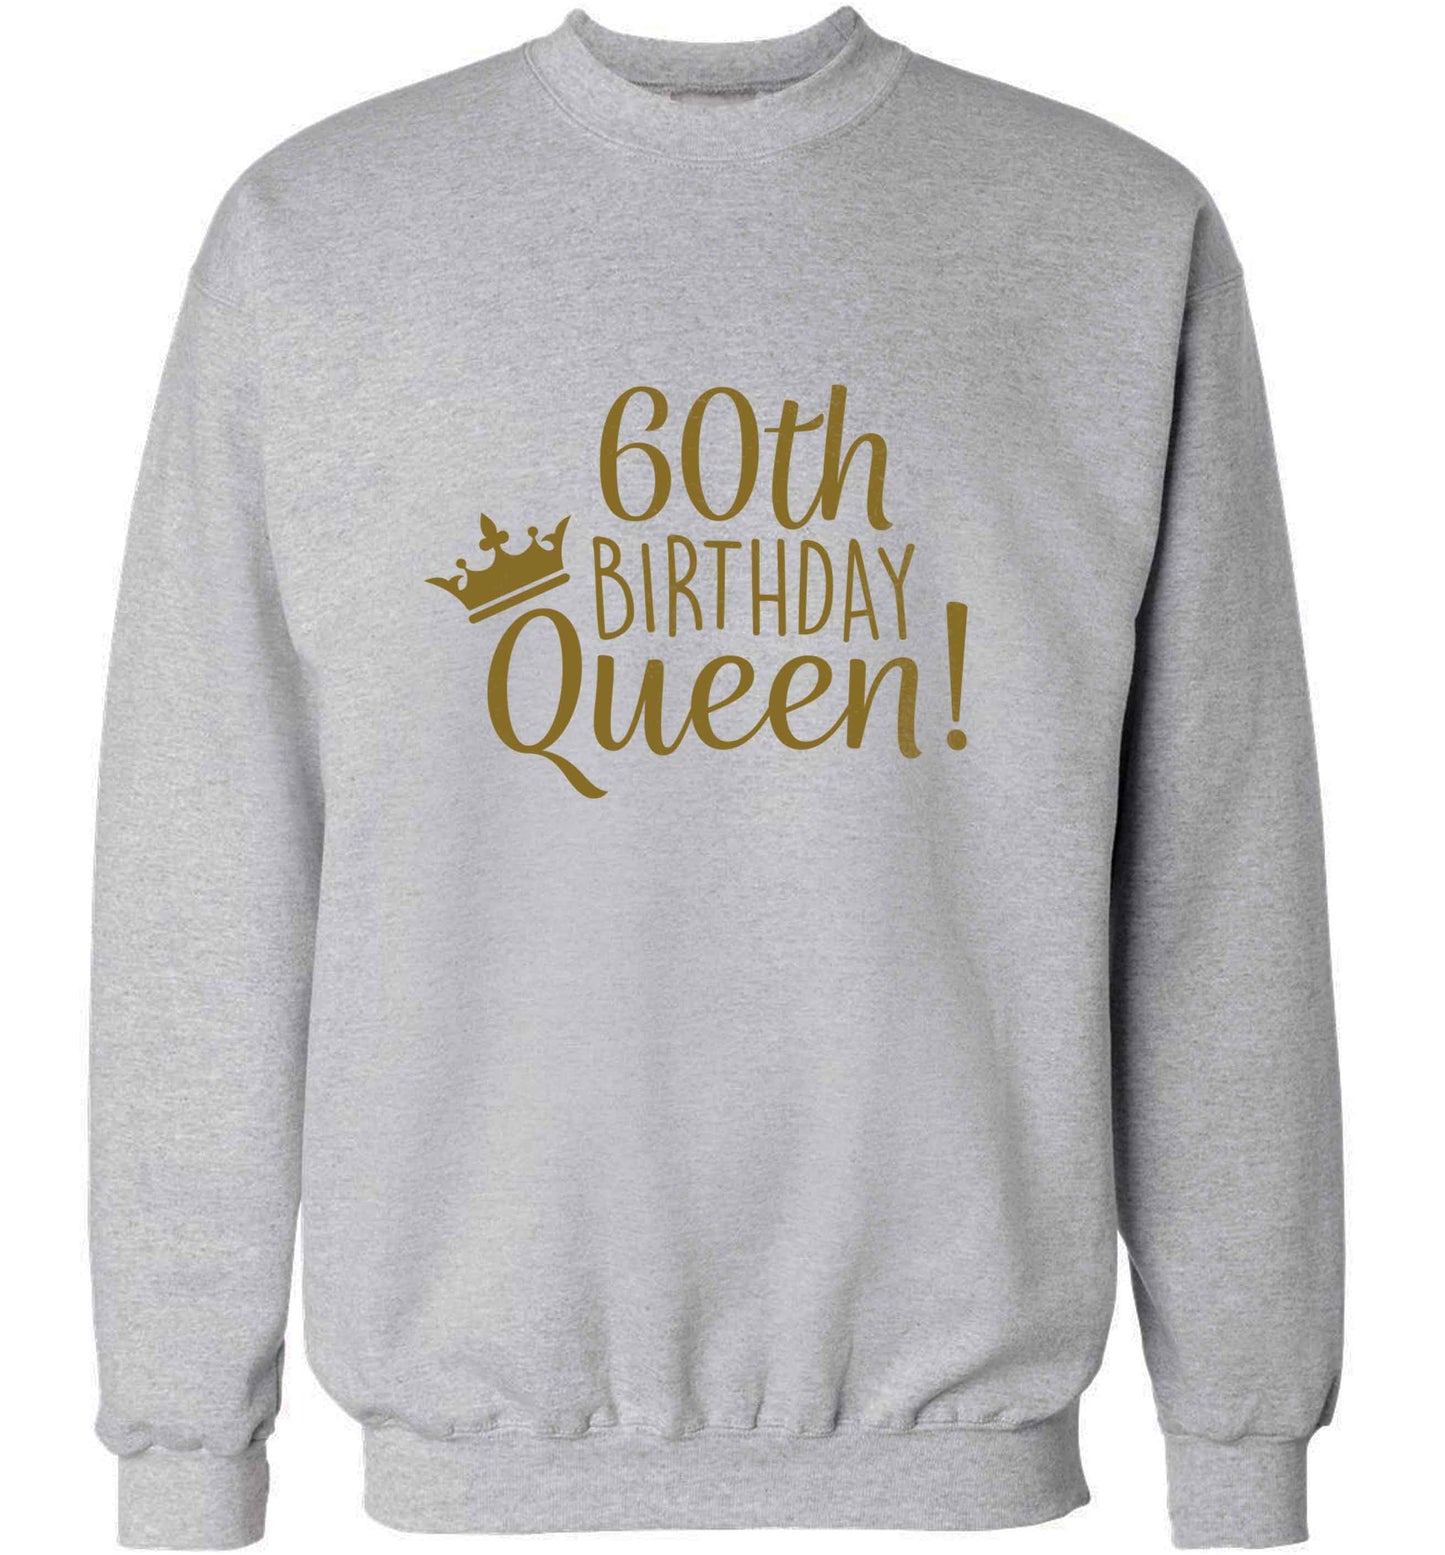 60th birthday Queen adult's unisex grey sweater 2XL